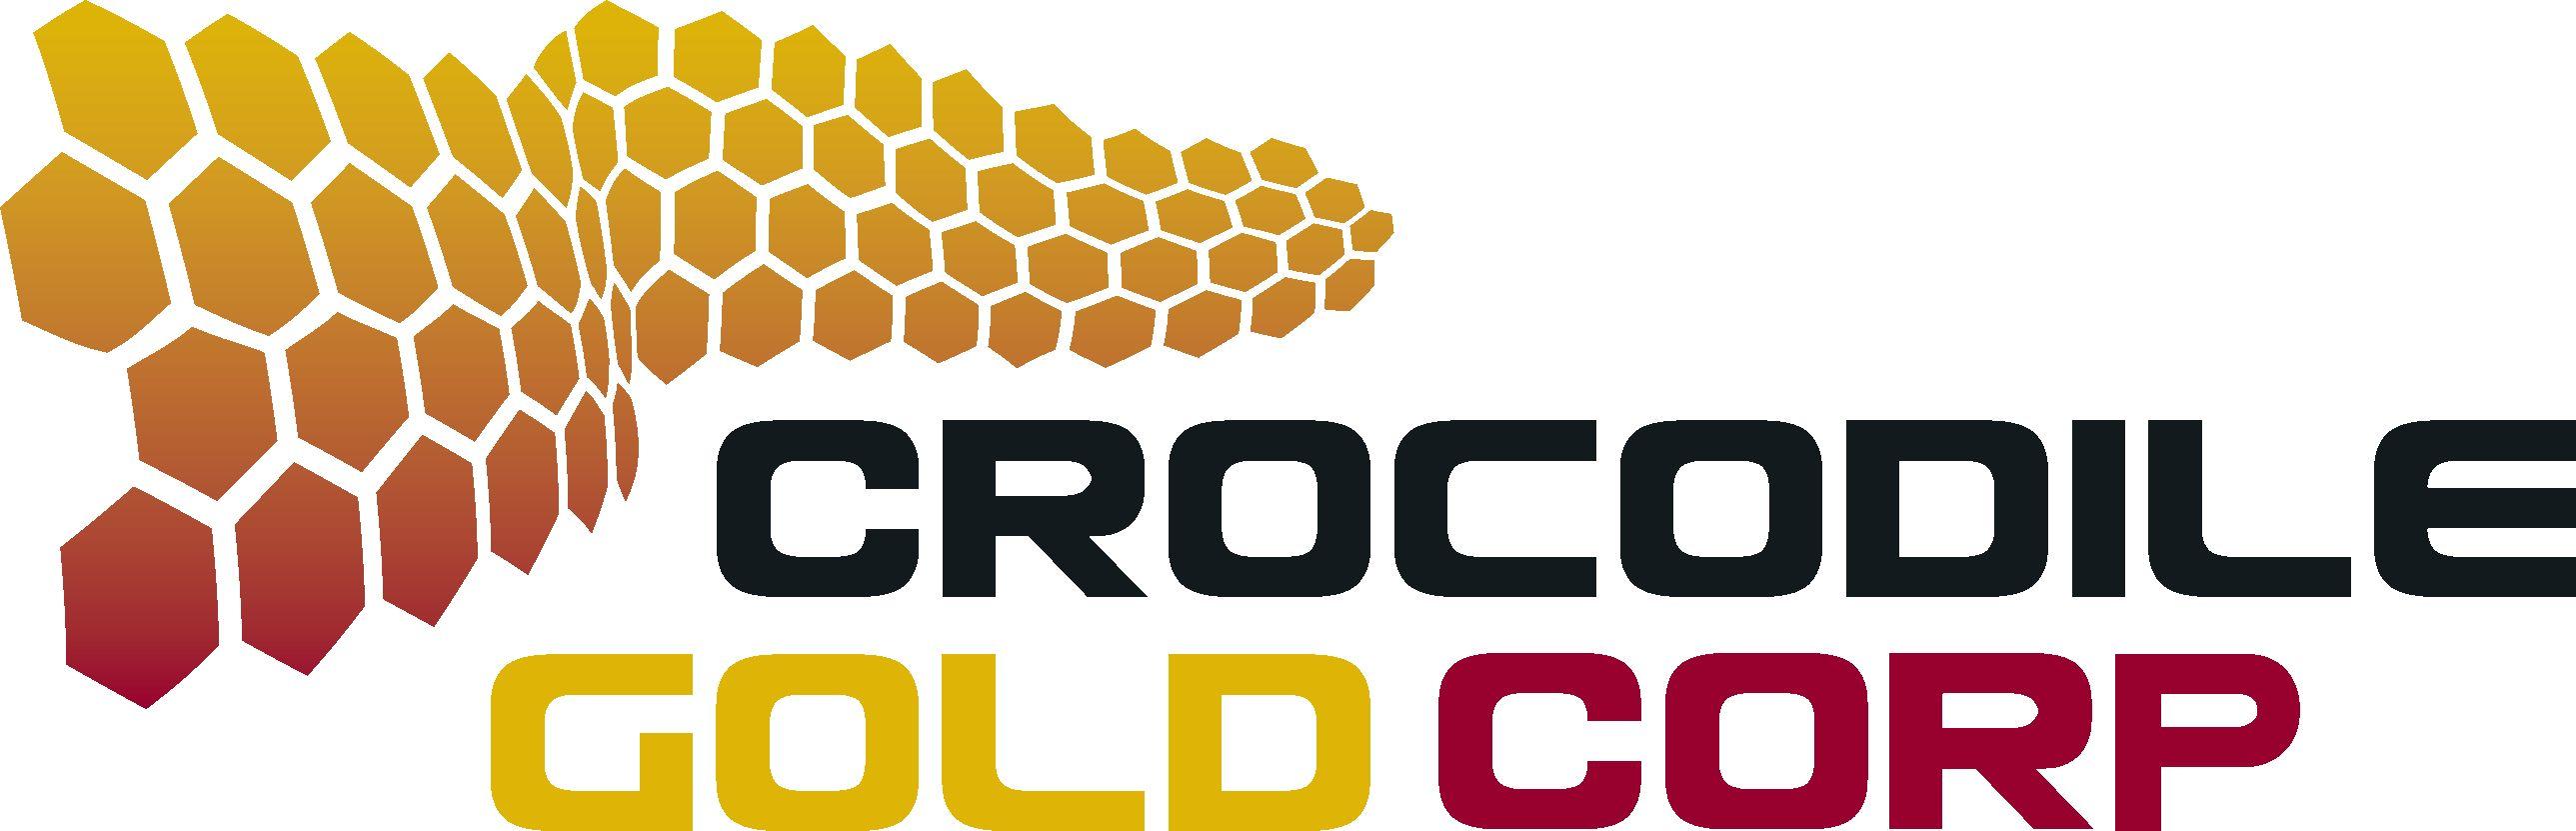 Goldcorp Logo - Crocodile Gold Corp Logo